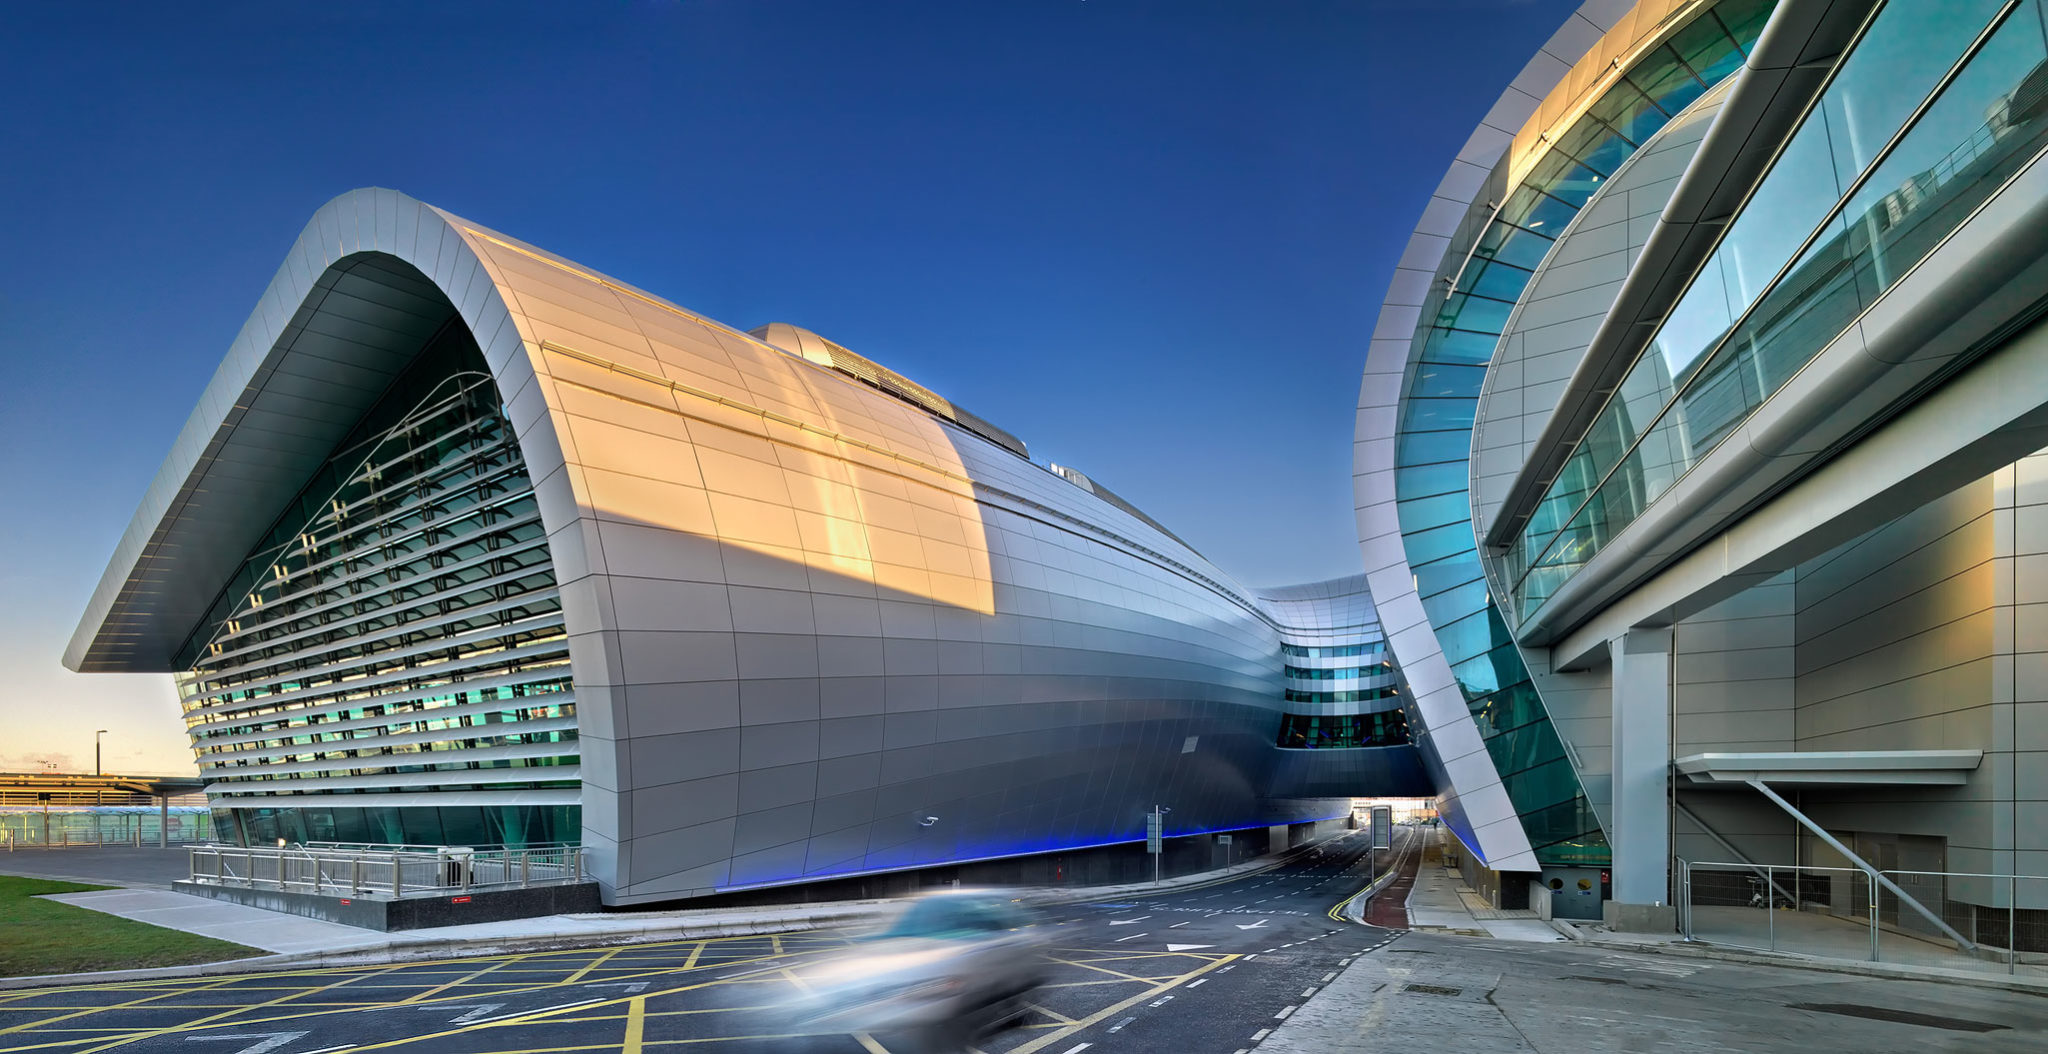 Dublin Airport Opens New Boarding Gate Area